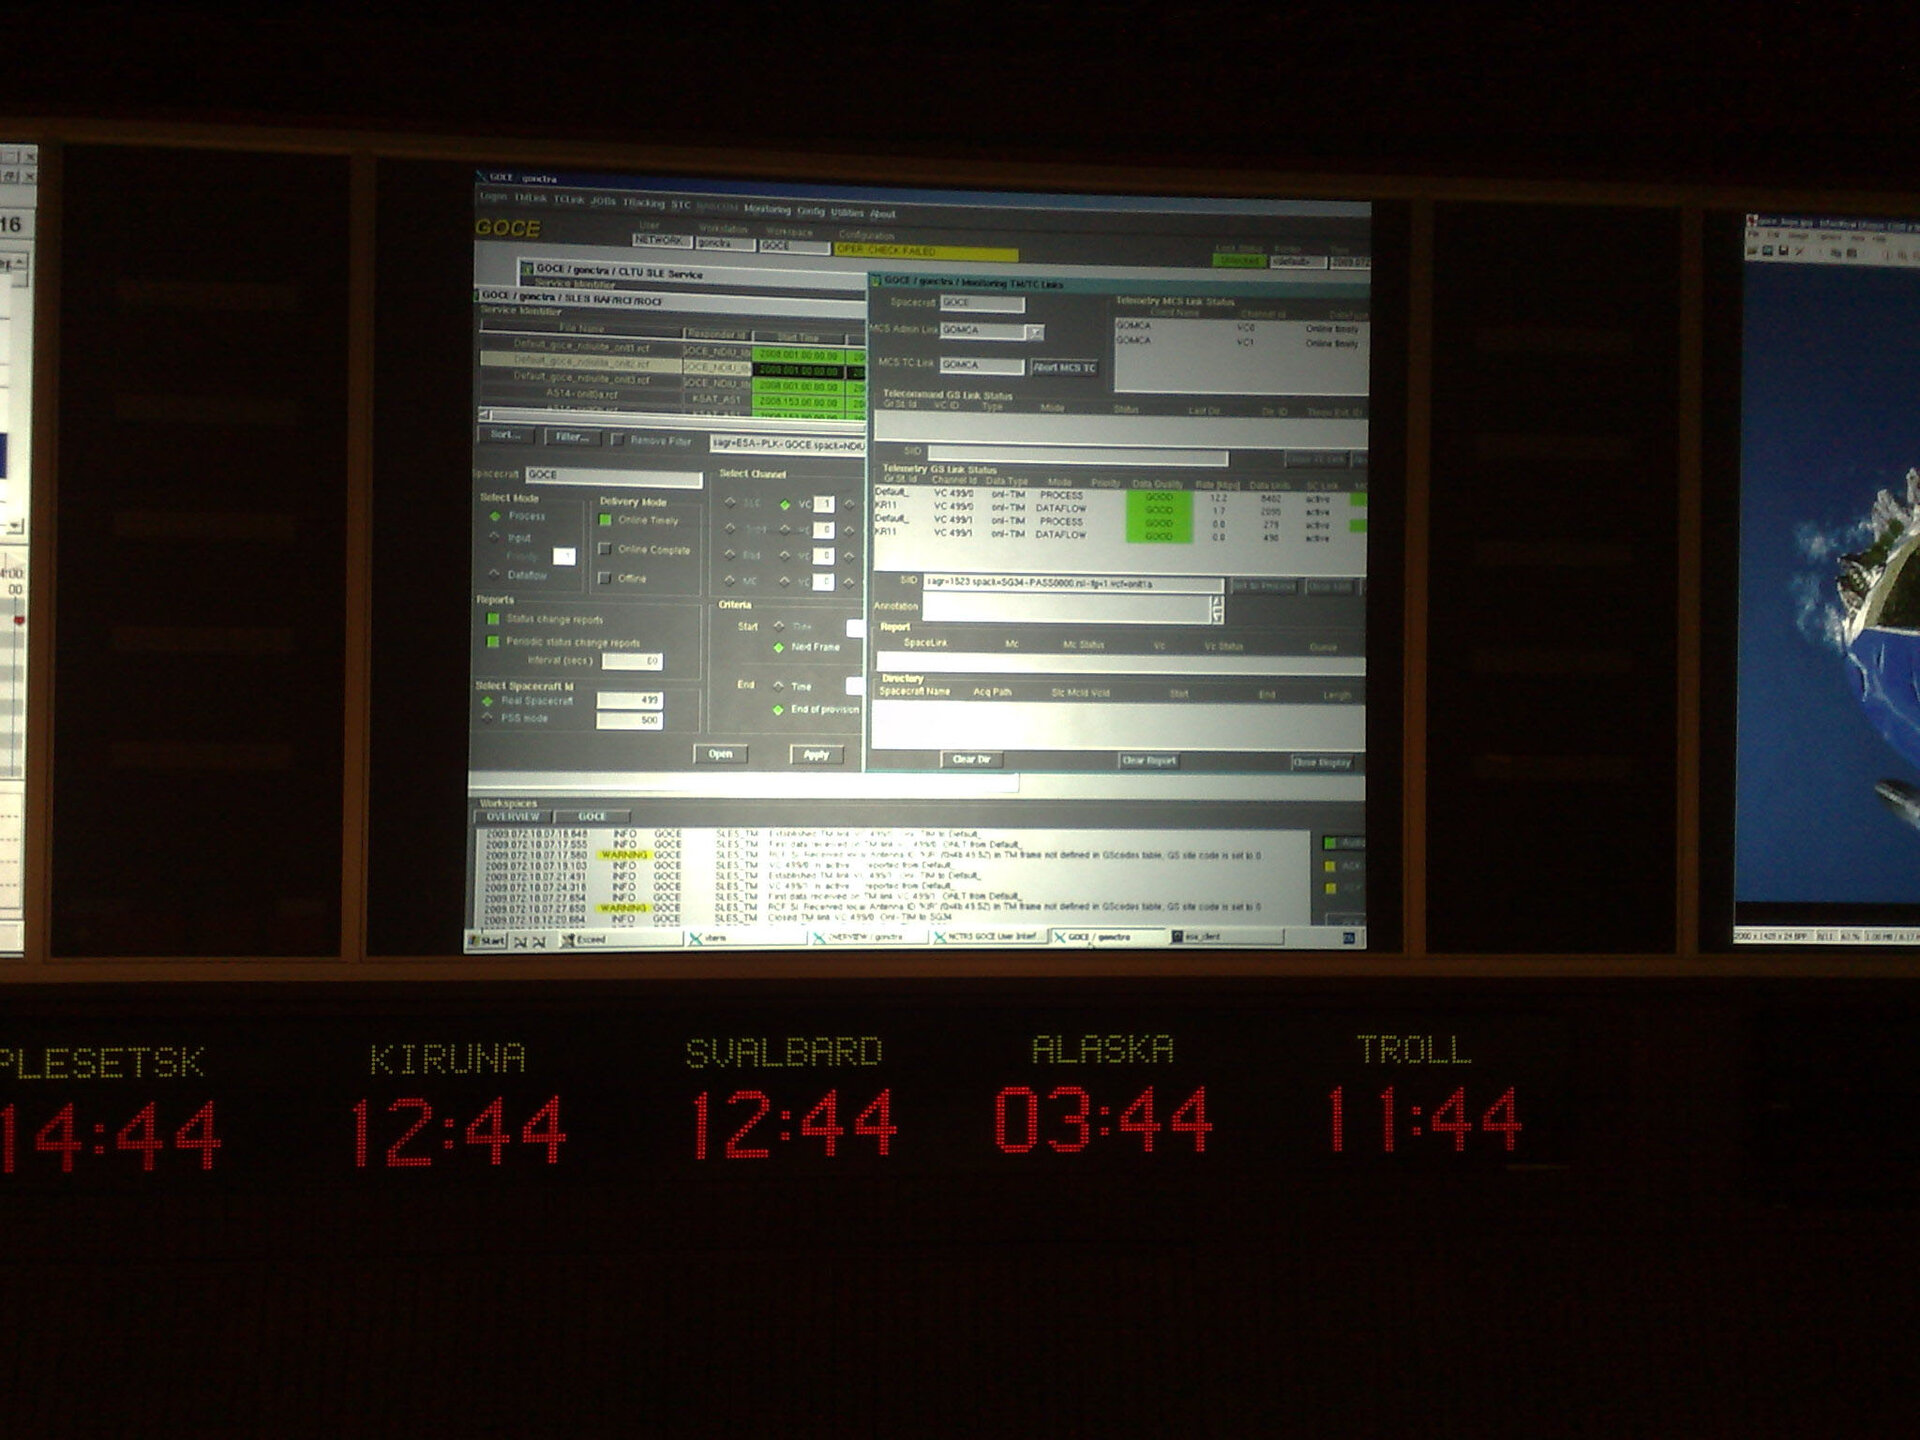 GOCE Mission Control System display